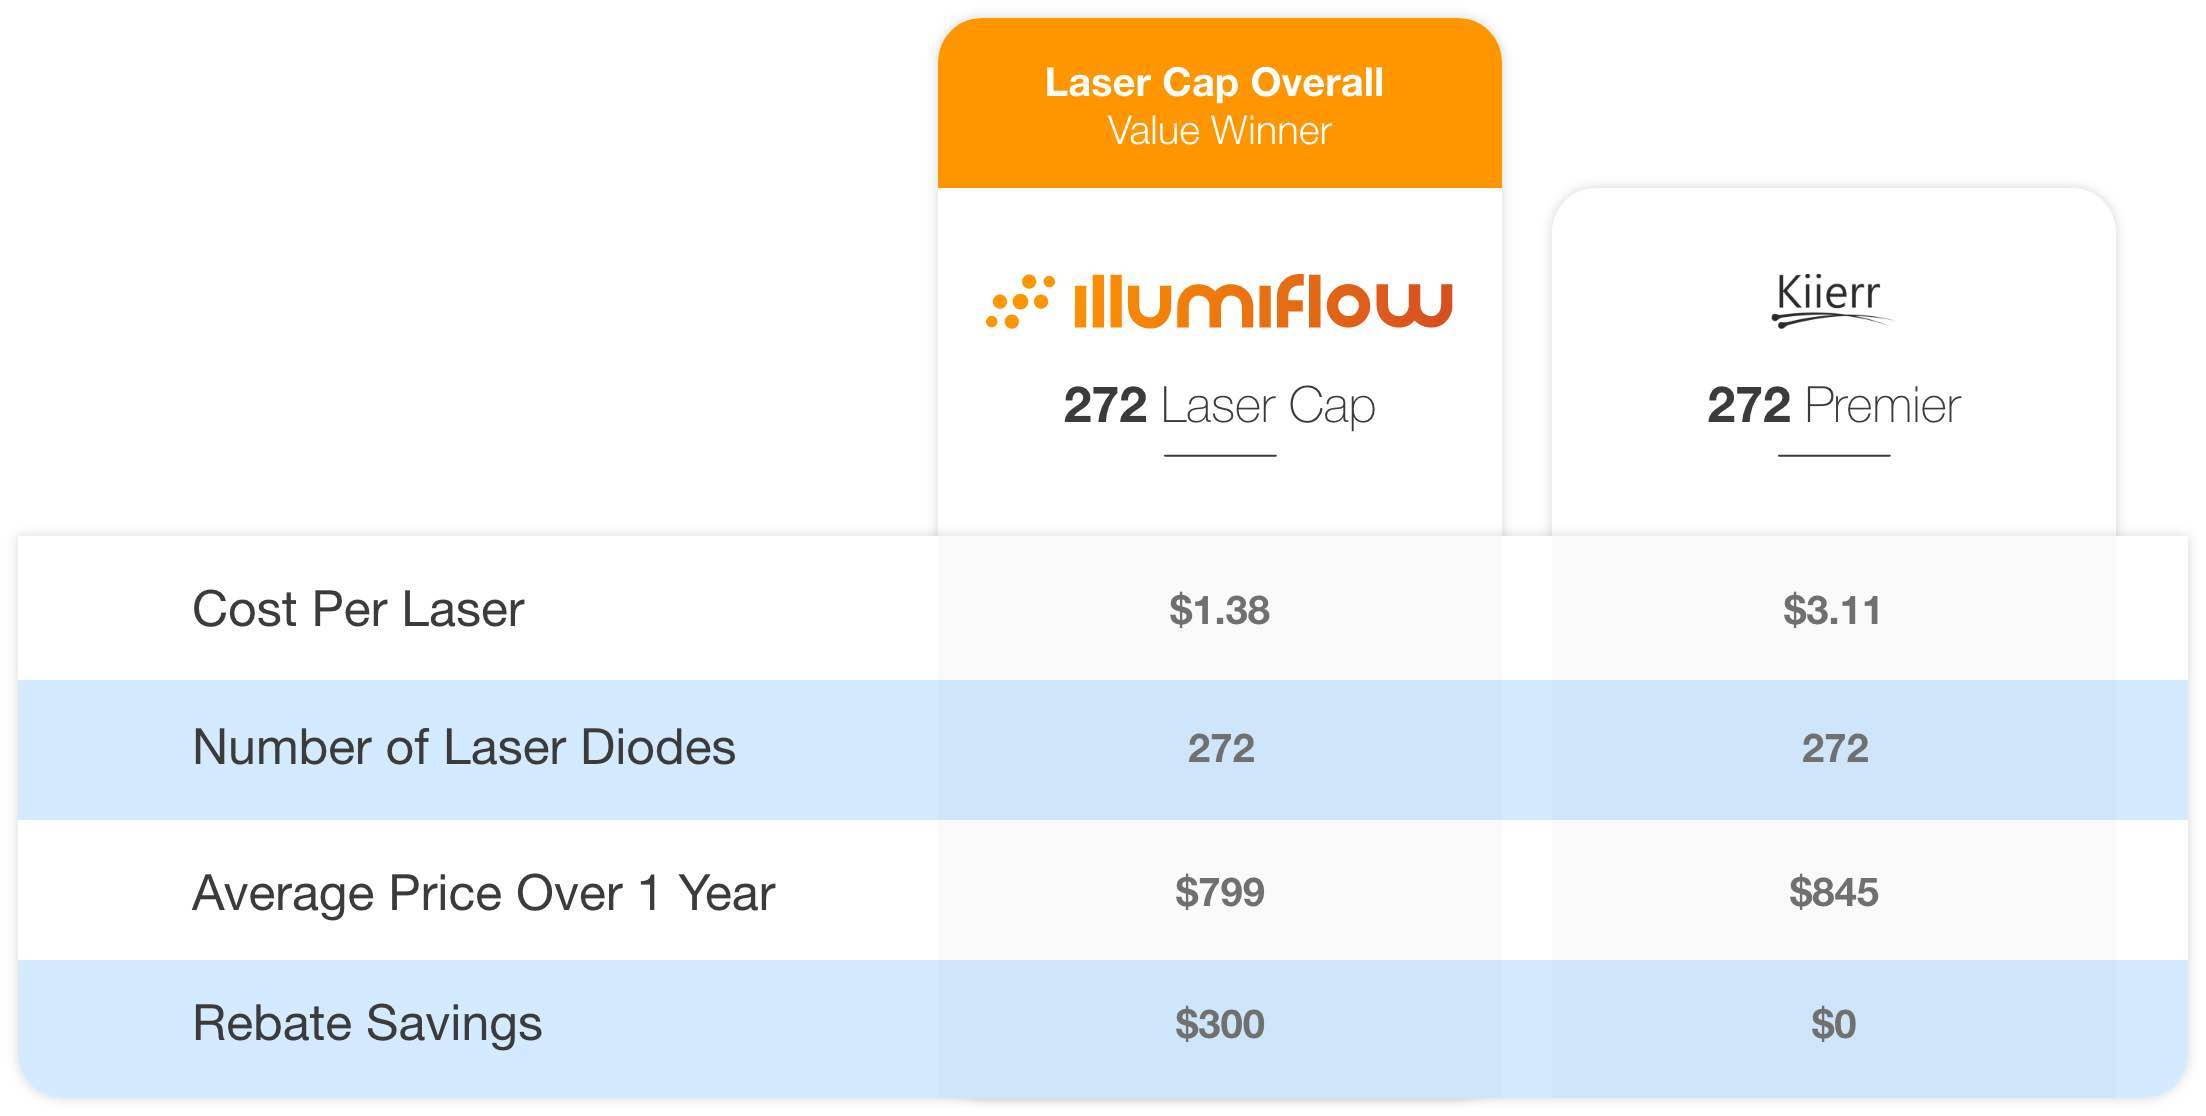 cost per laser comparison between kiierr and illumiflow laser caps